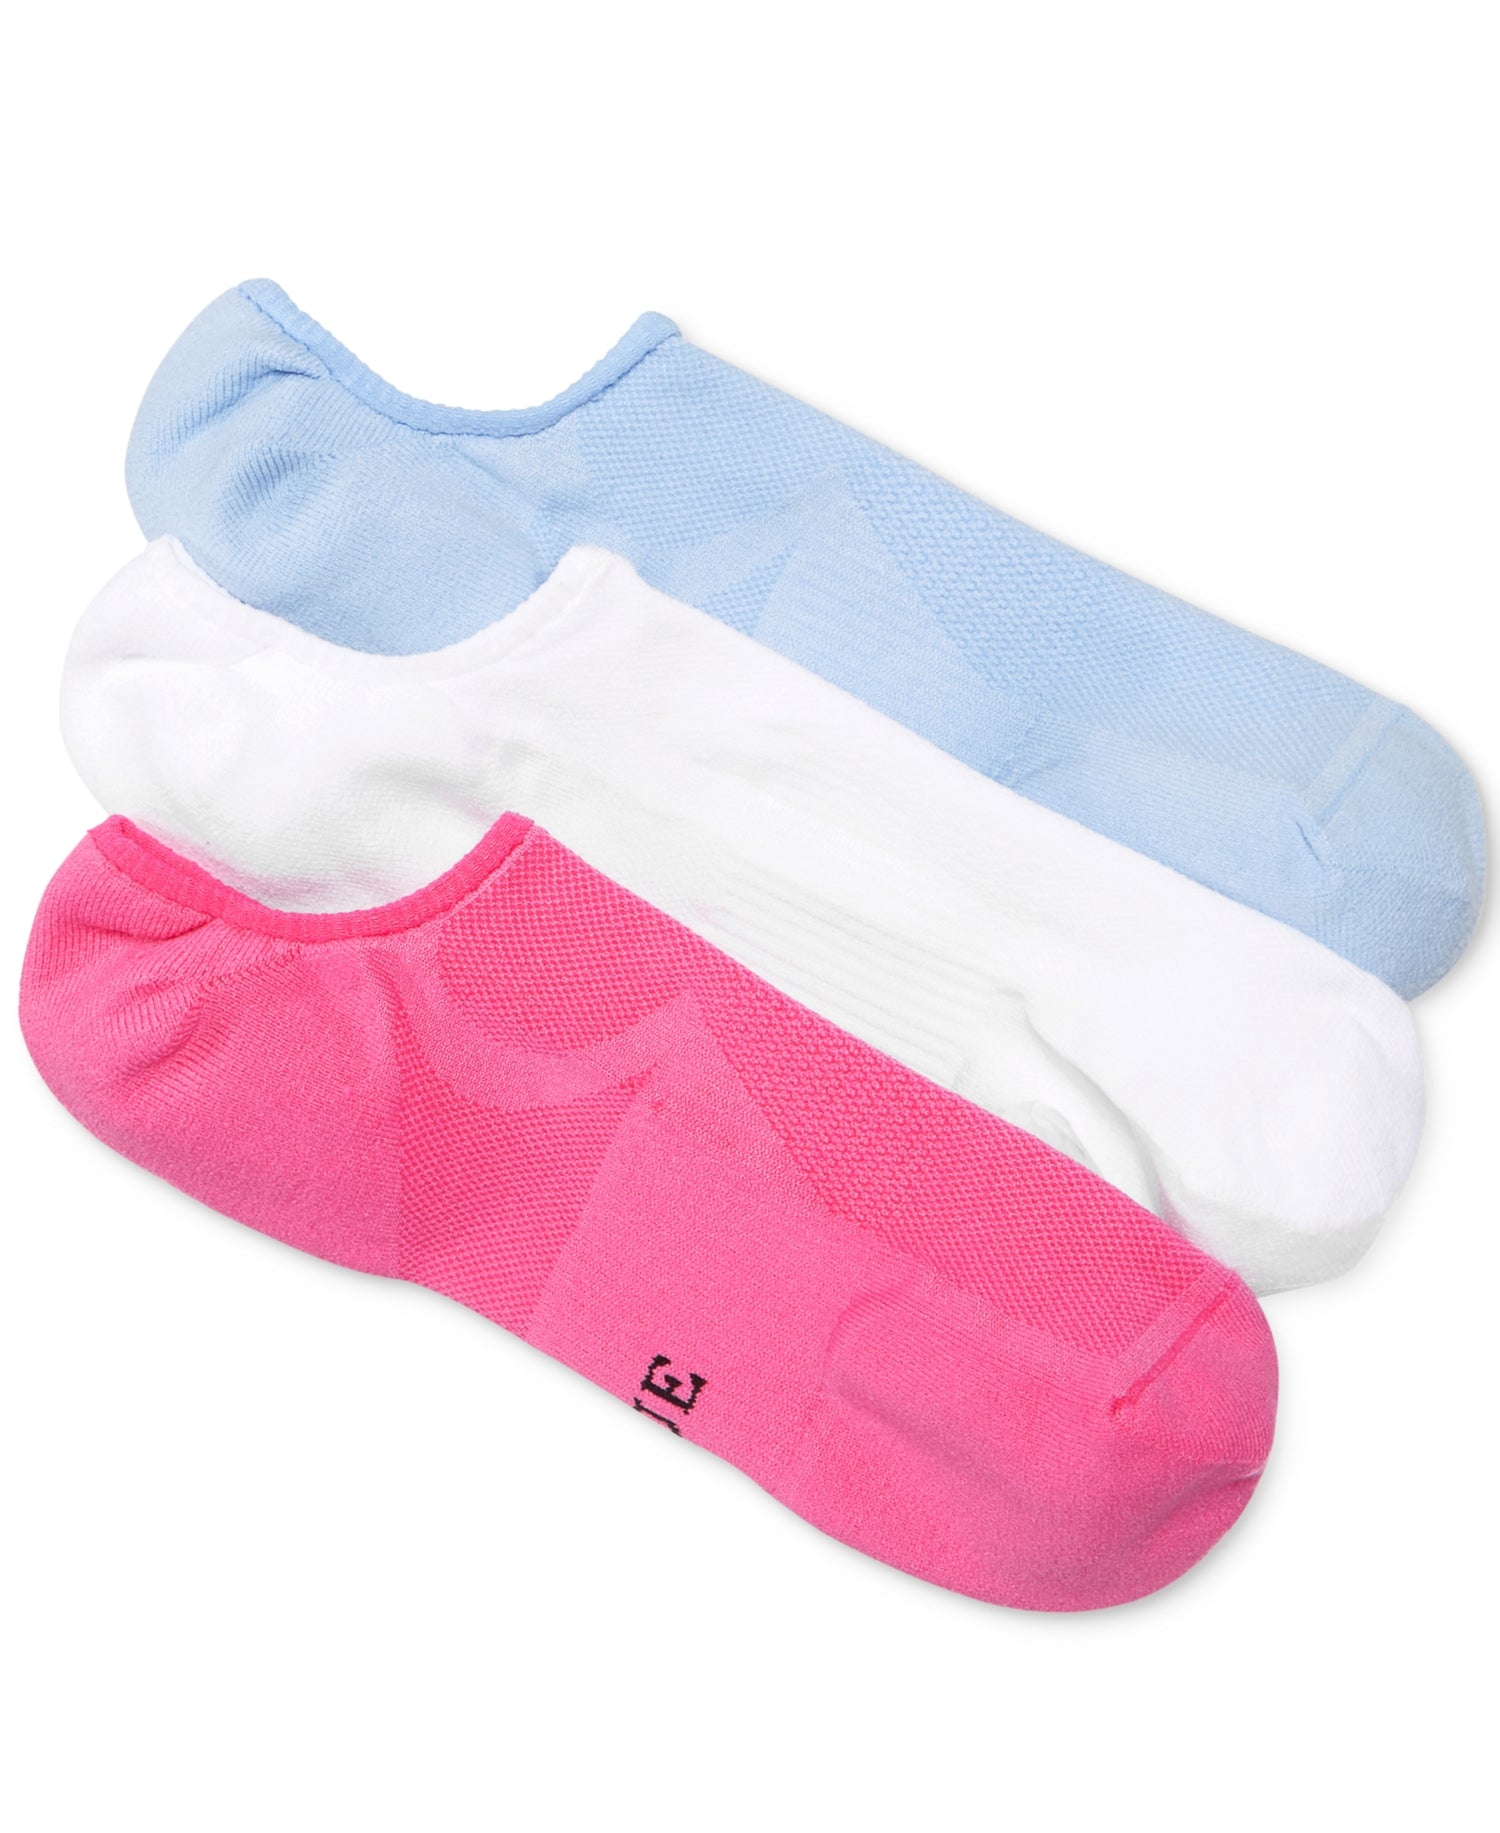 Hue Womens Air Sleek Compression Socks